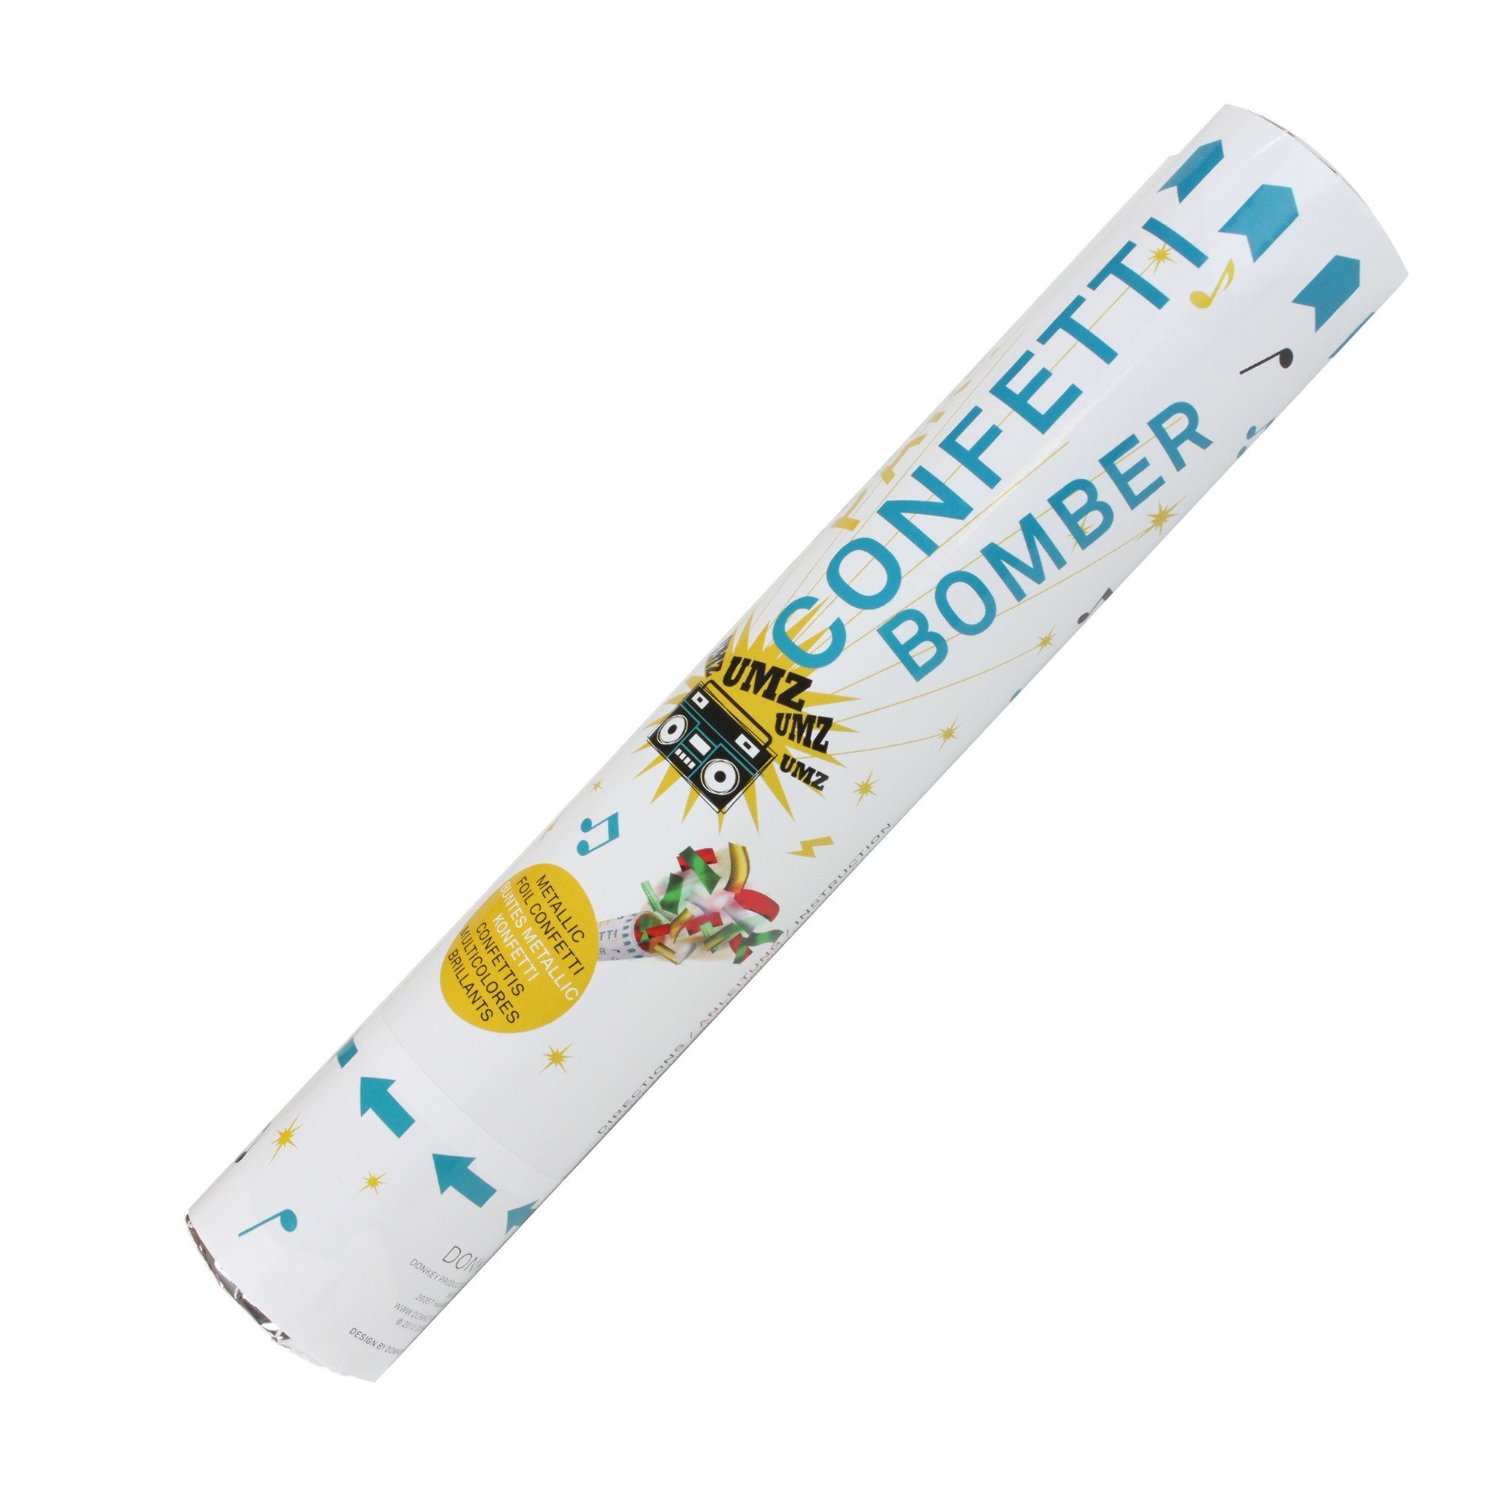 Confetti - Party Confetti Bomber | Donkey